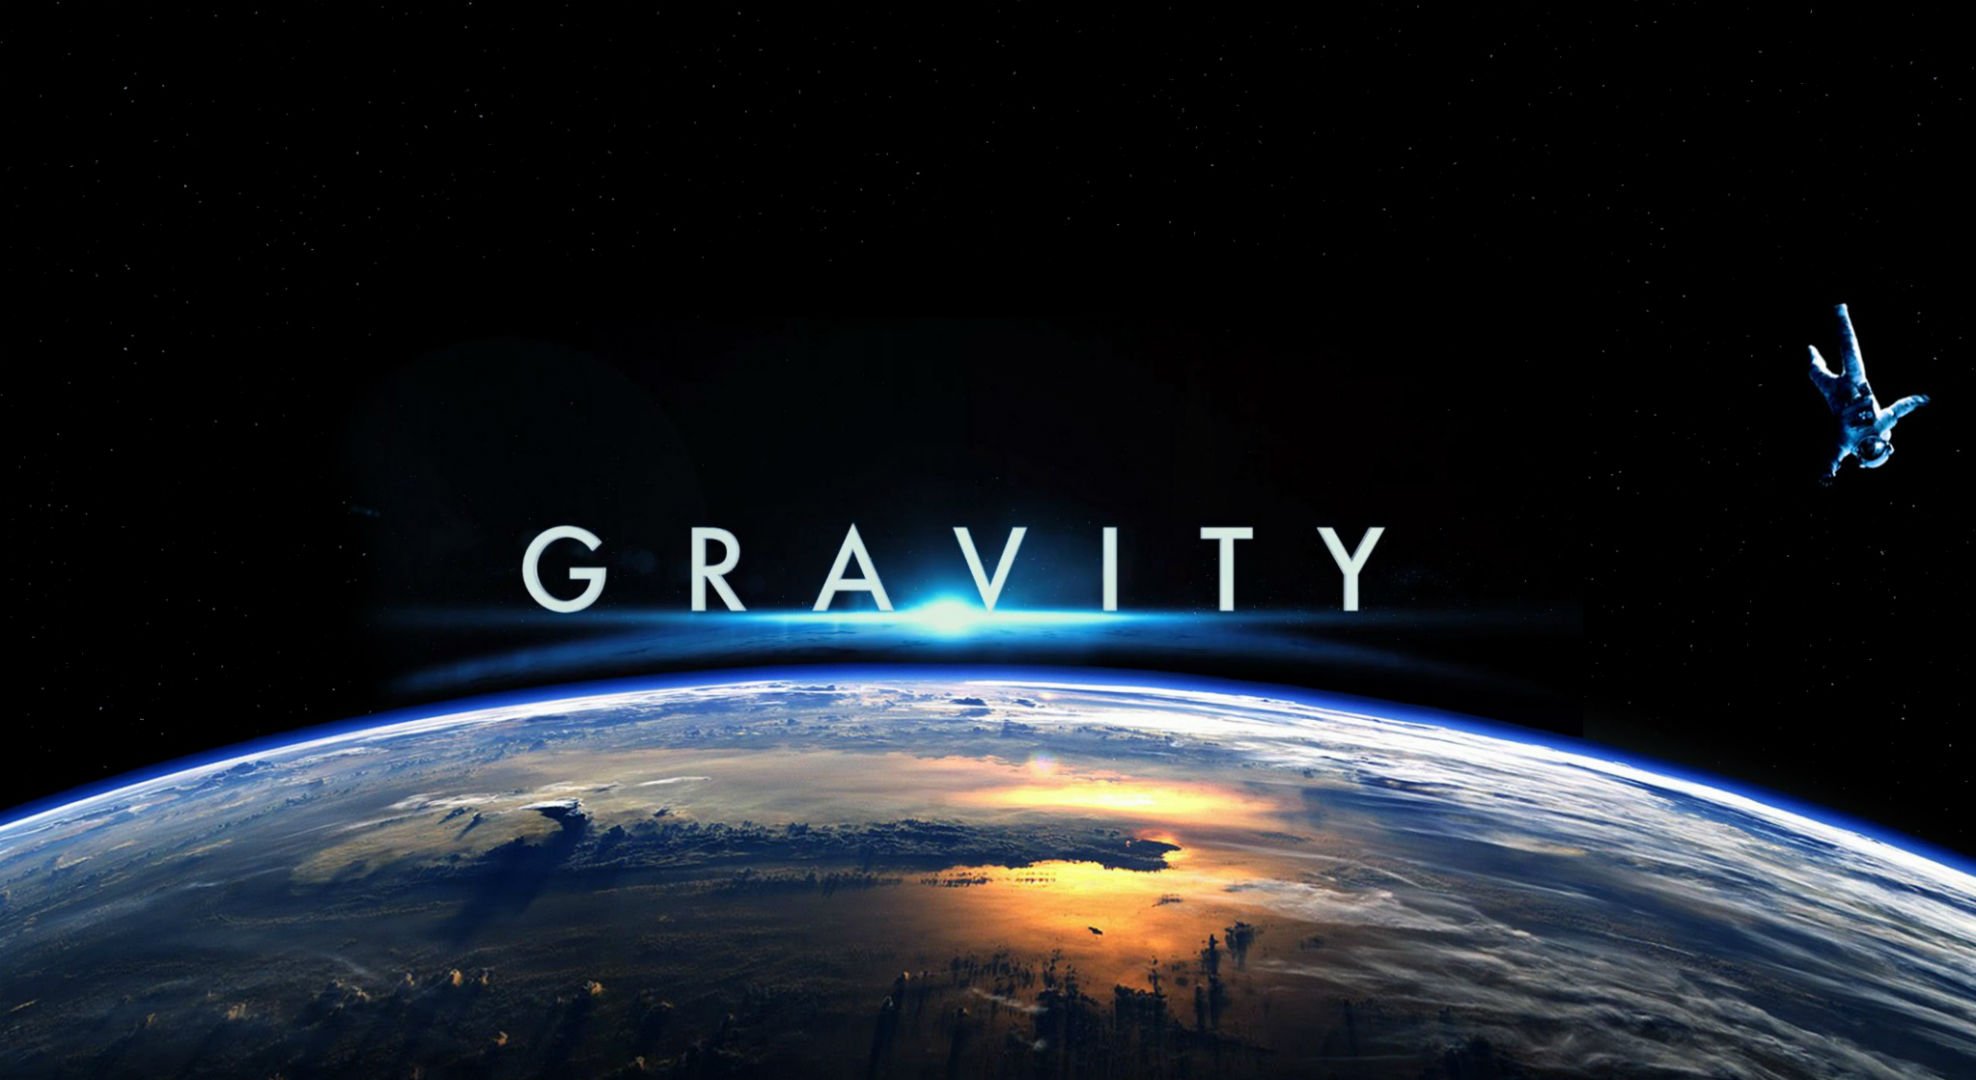 Gravity Drama Sci Fi Thriller Space Astronaut Poster Jd Wallpaper